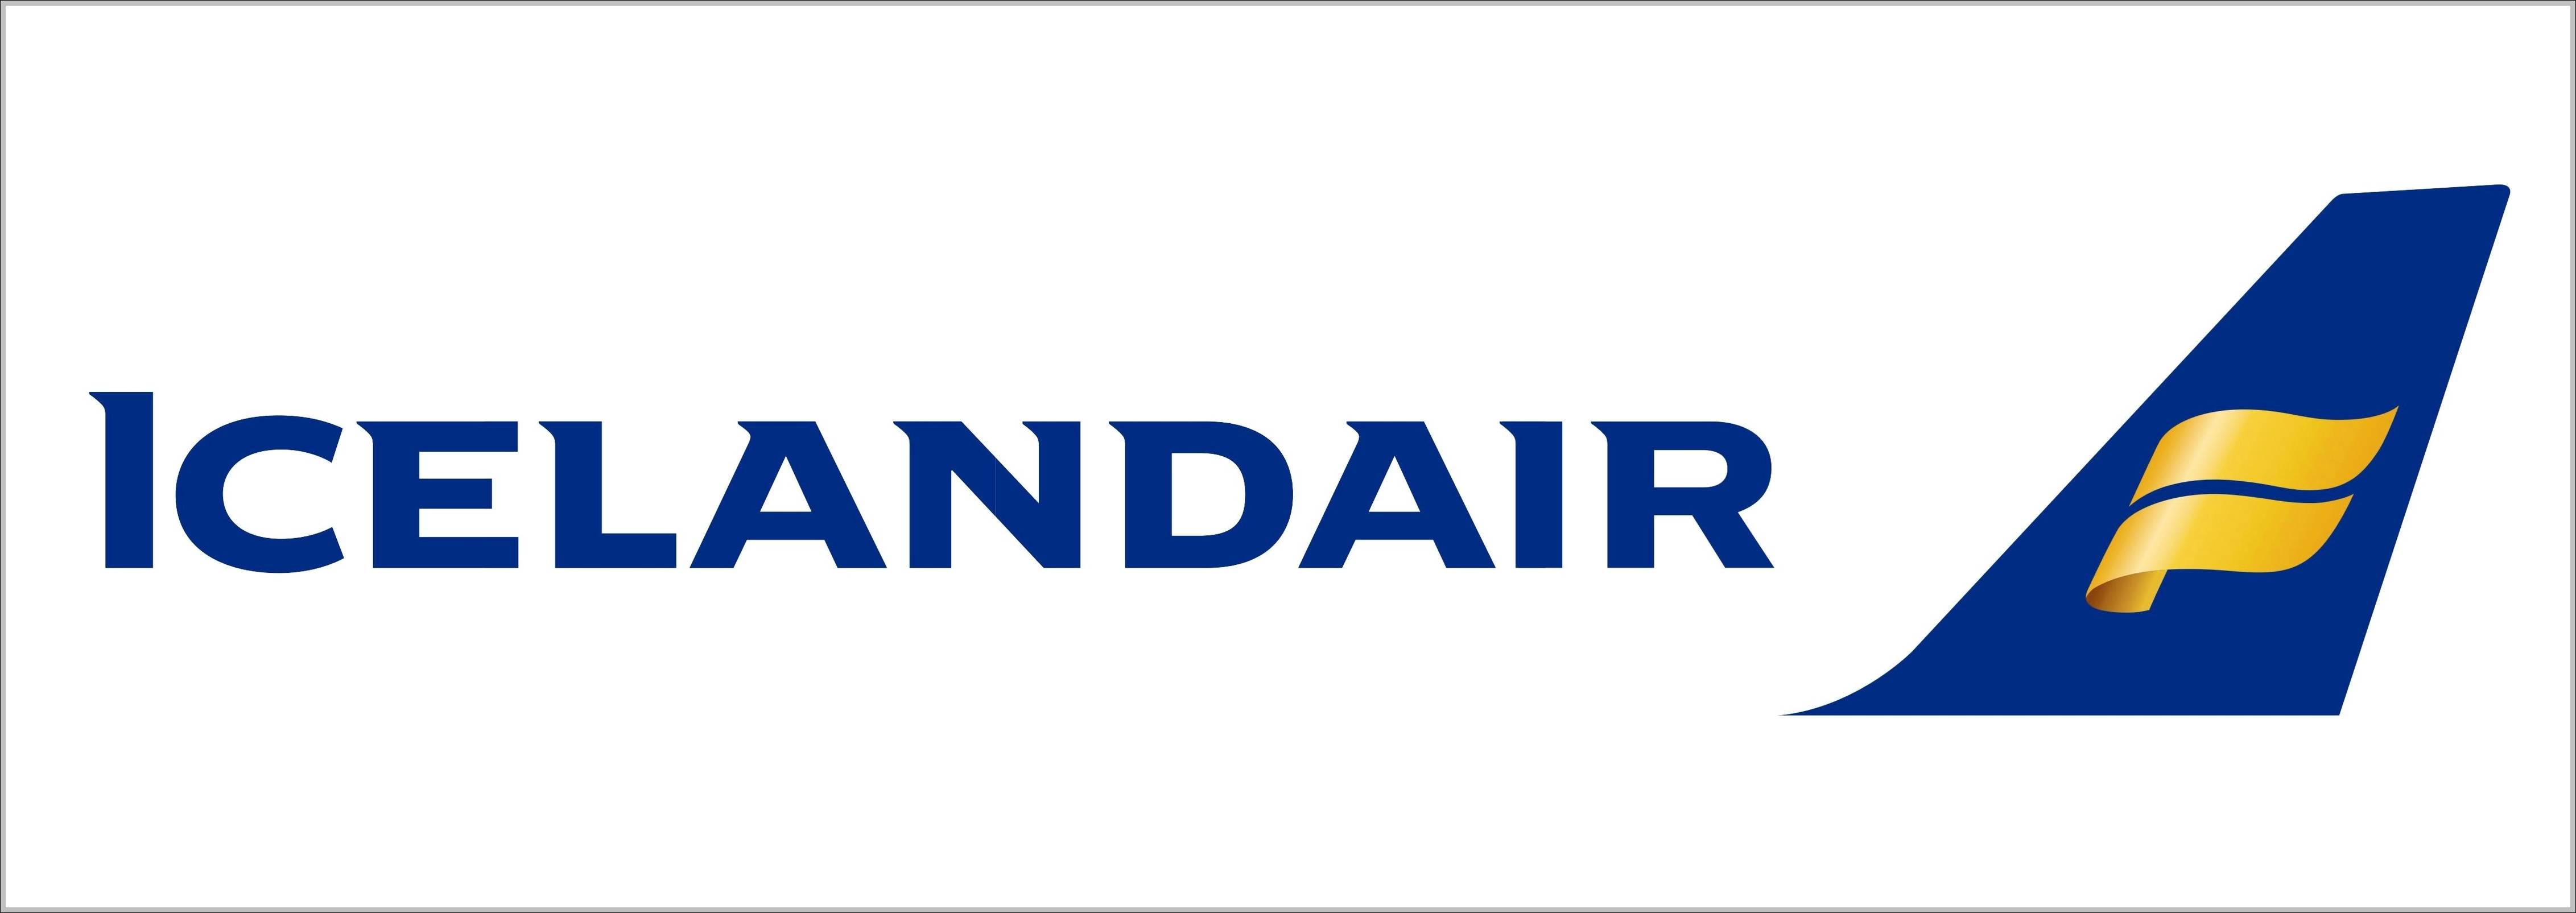 Icelandair sign